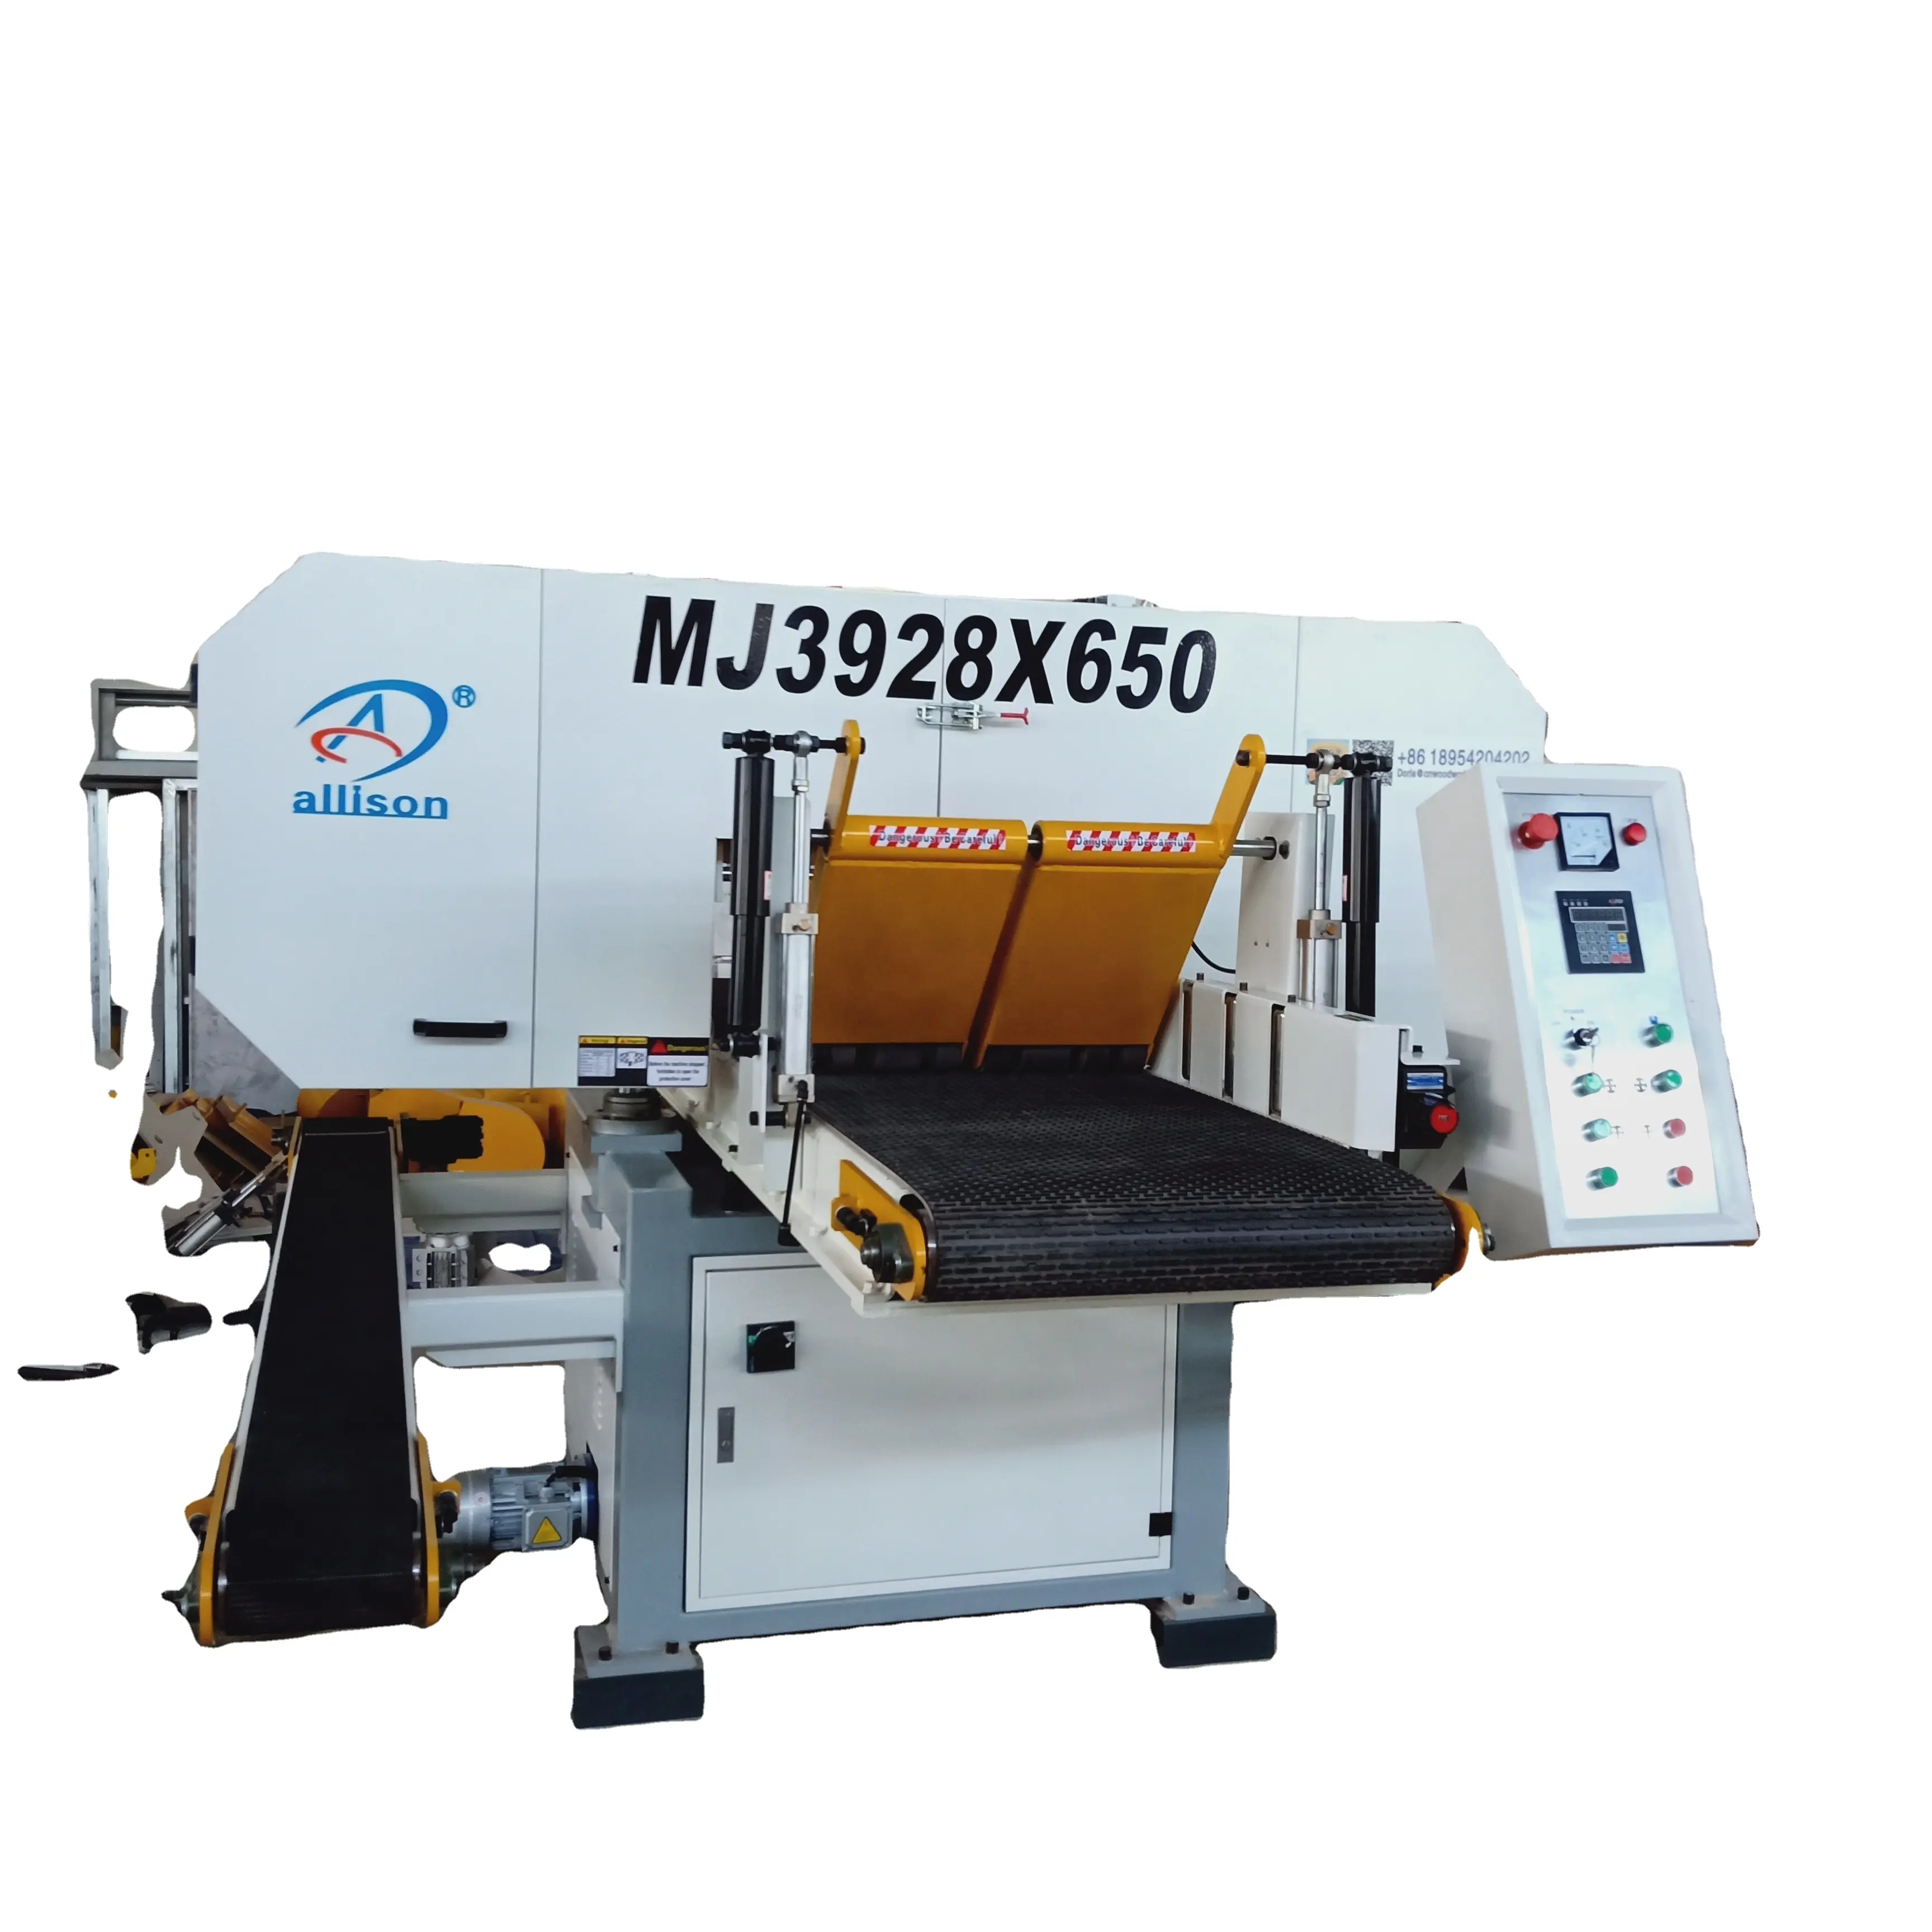 MJ3928*650 heavy duty automatic woodworking horizontal band saw machine